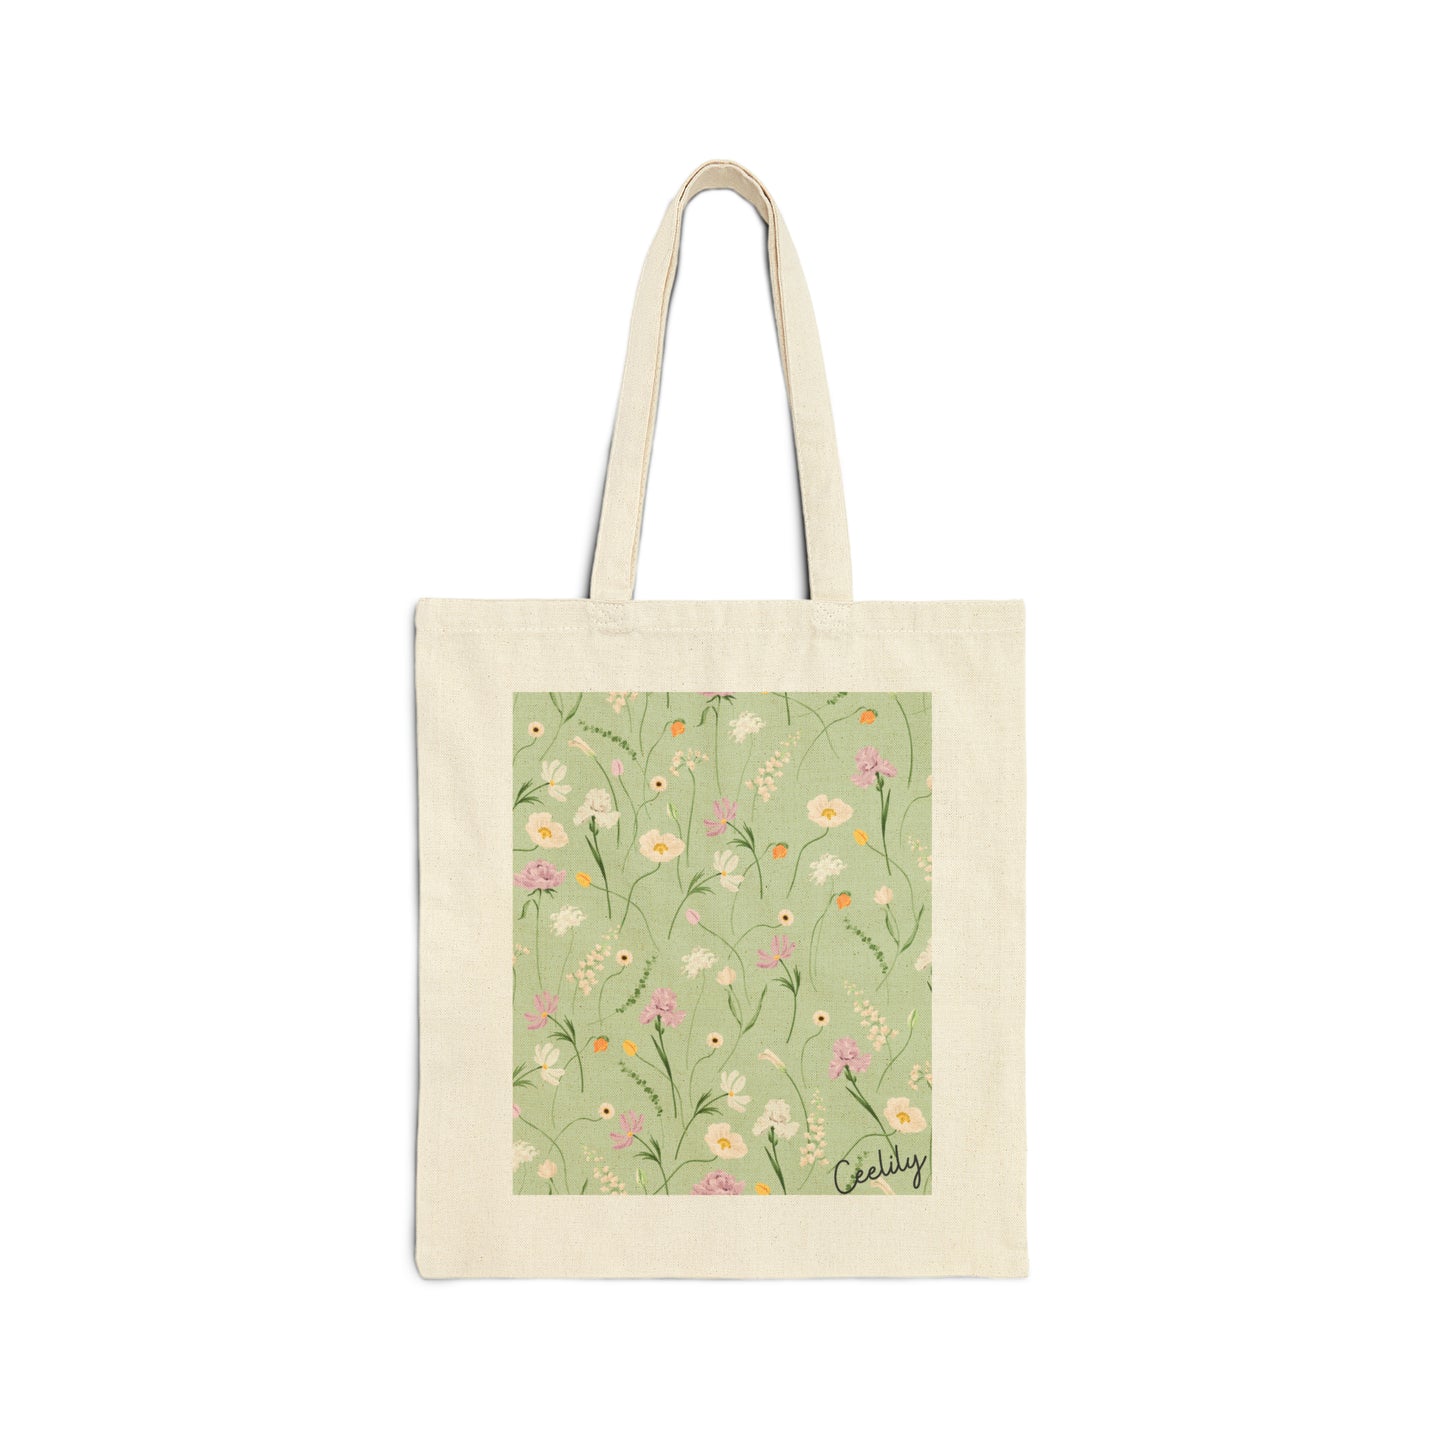 Green daisy tote bag